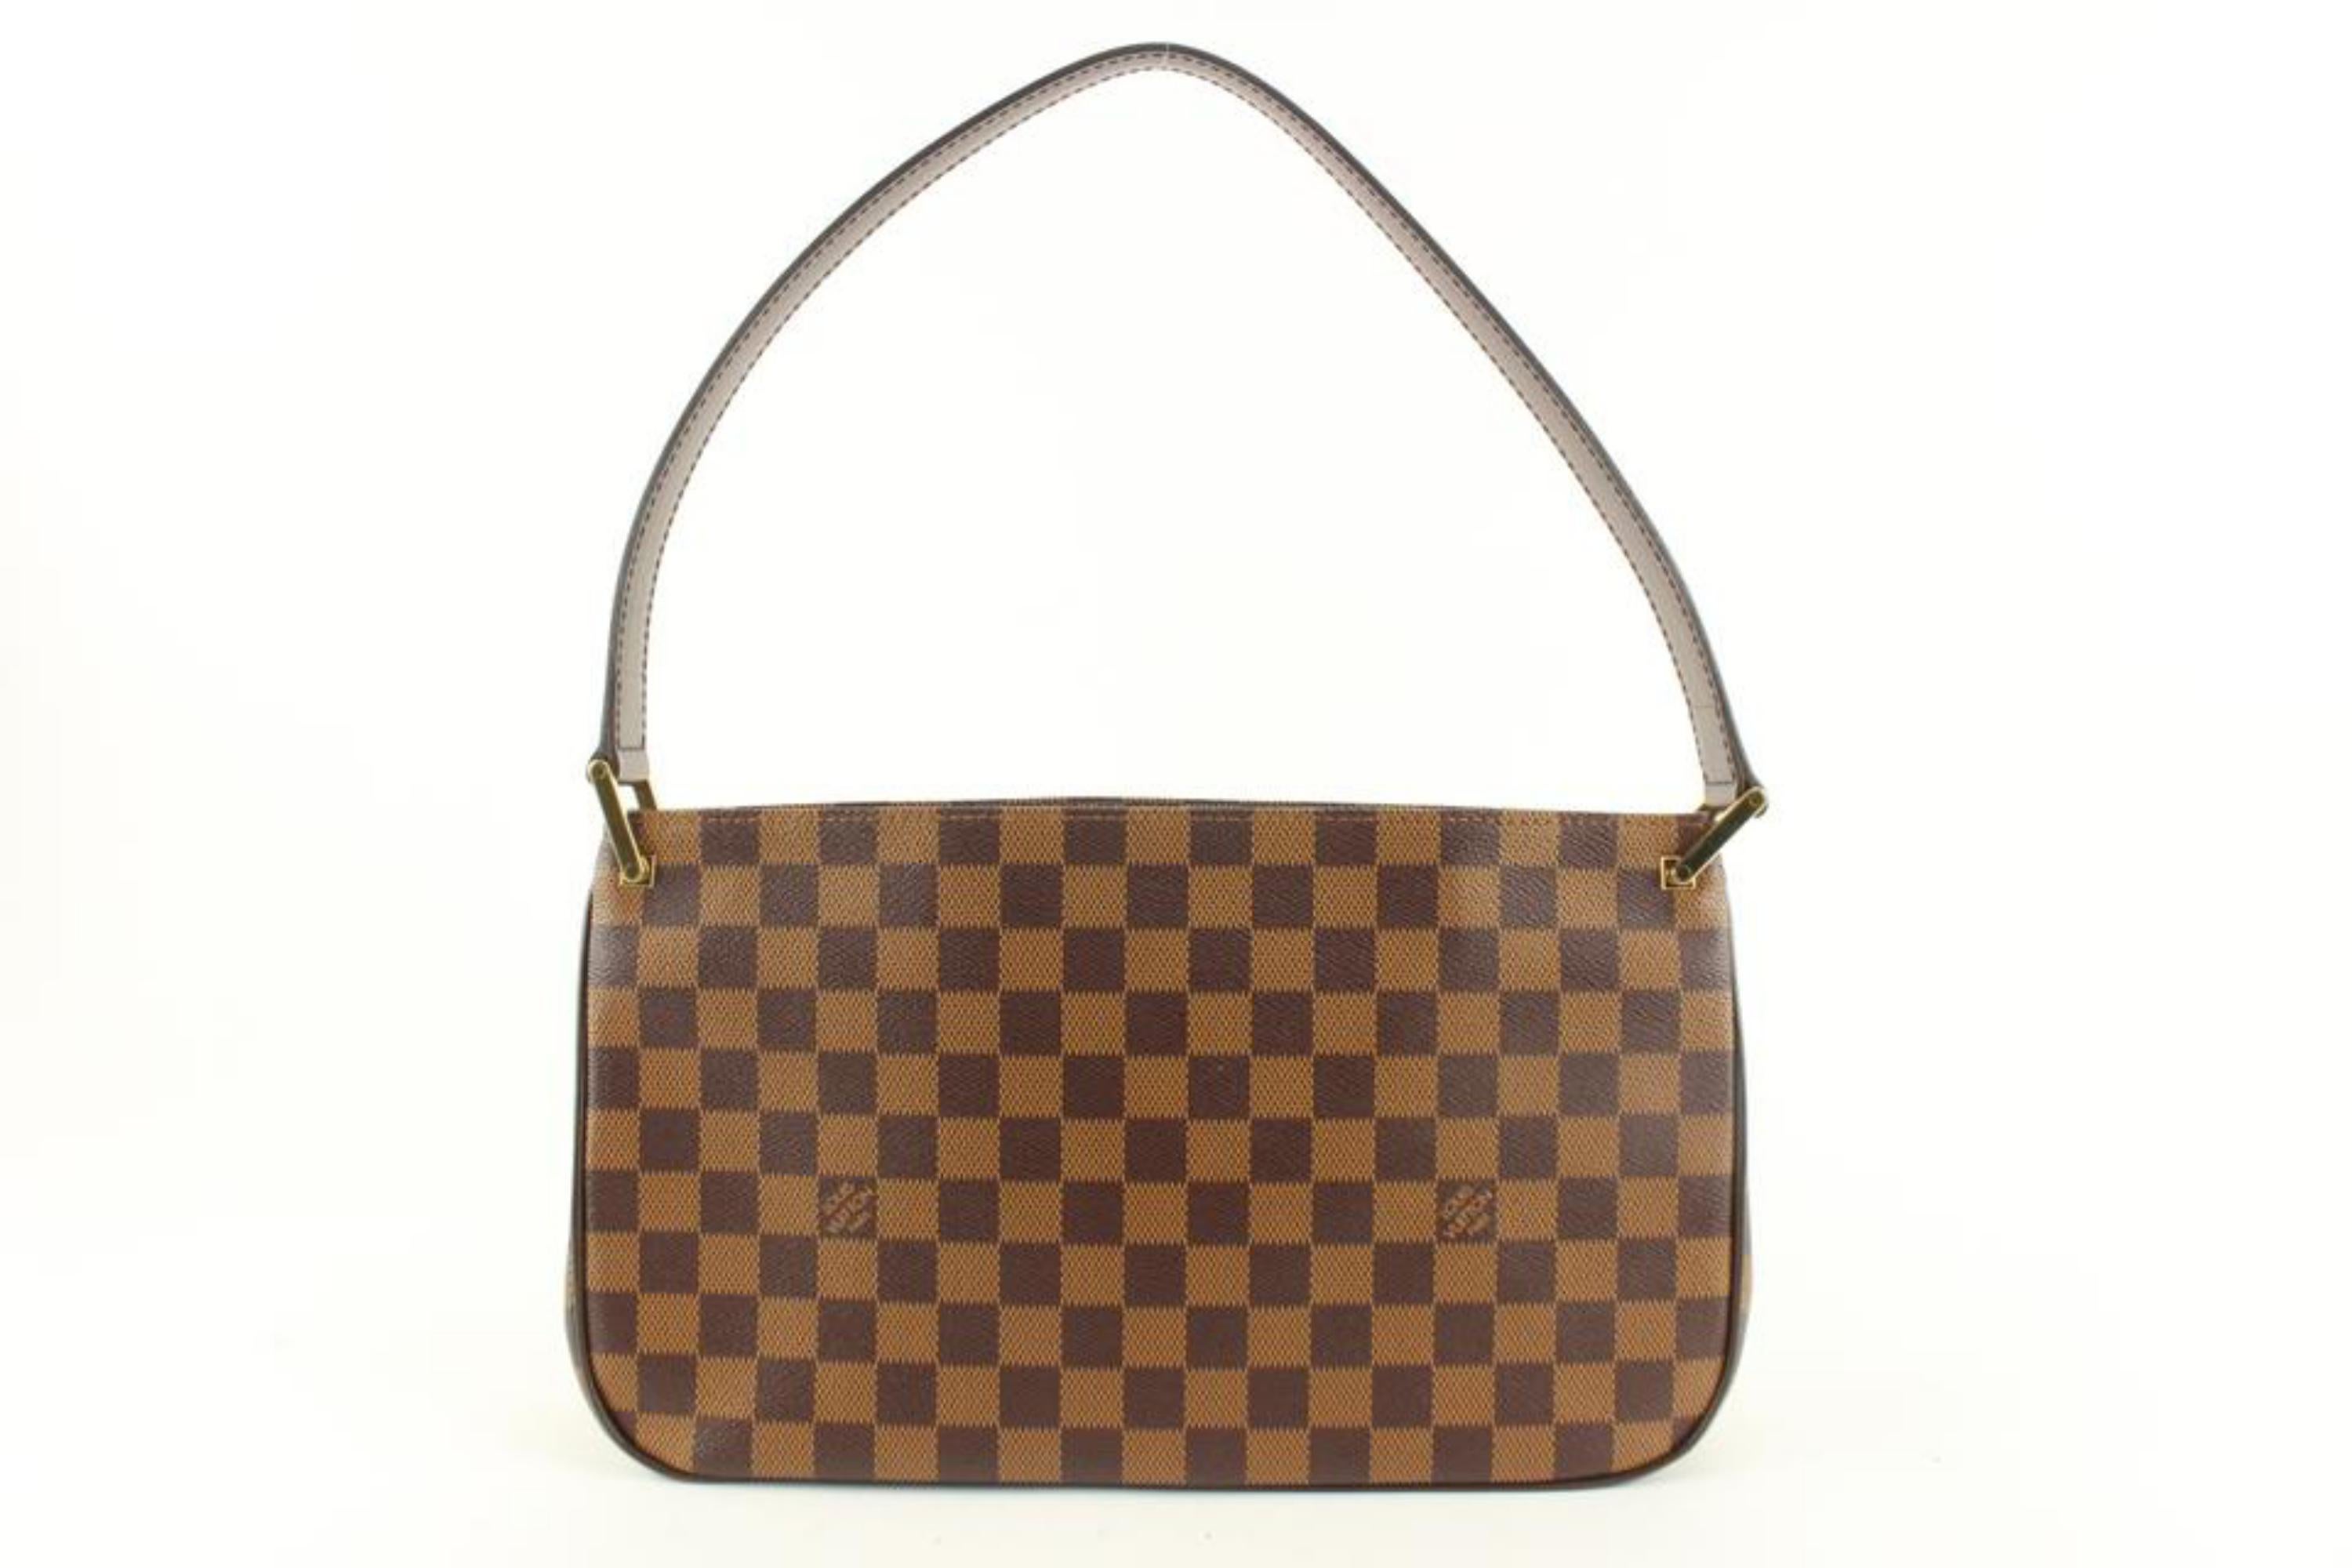 Louis Vuitton Damier Ebene Aubagne Pochette Shoulder Bag 1221lv21 In Excellent Condition For Sale In Dix hills, NY